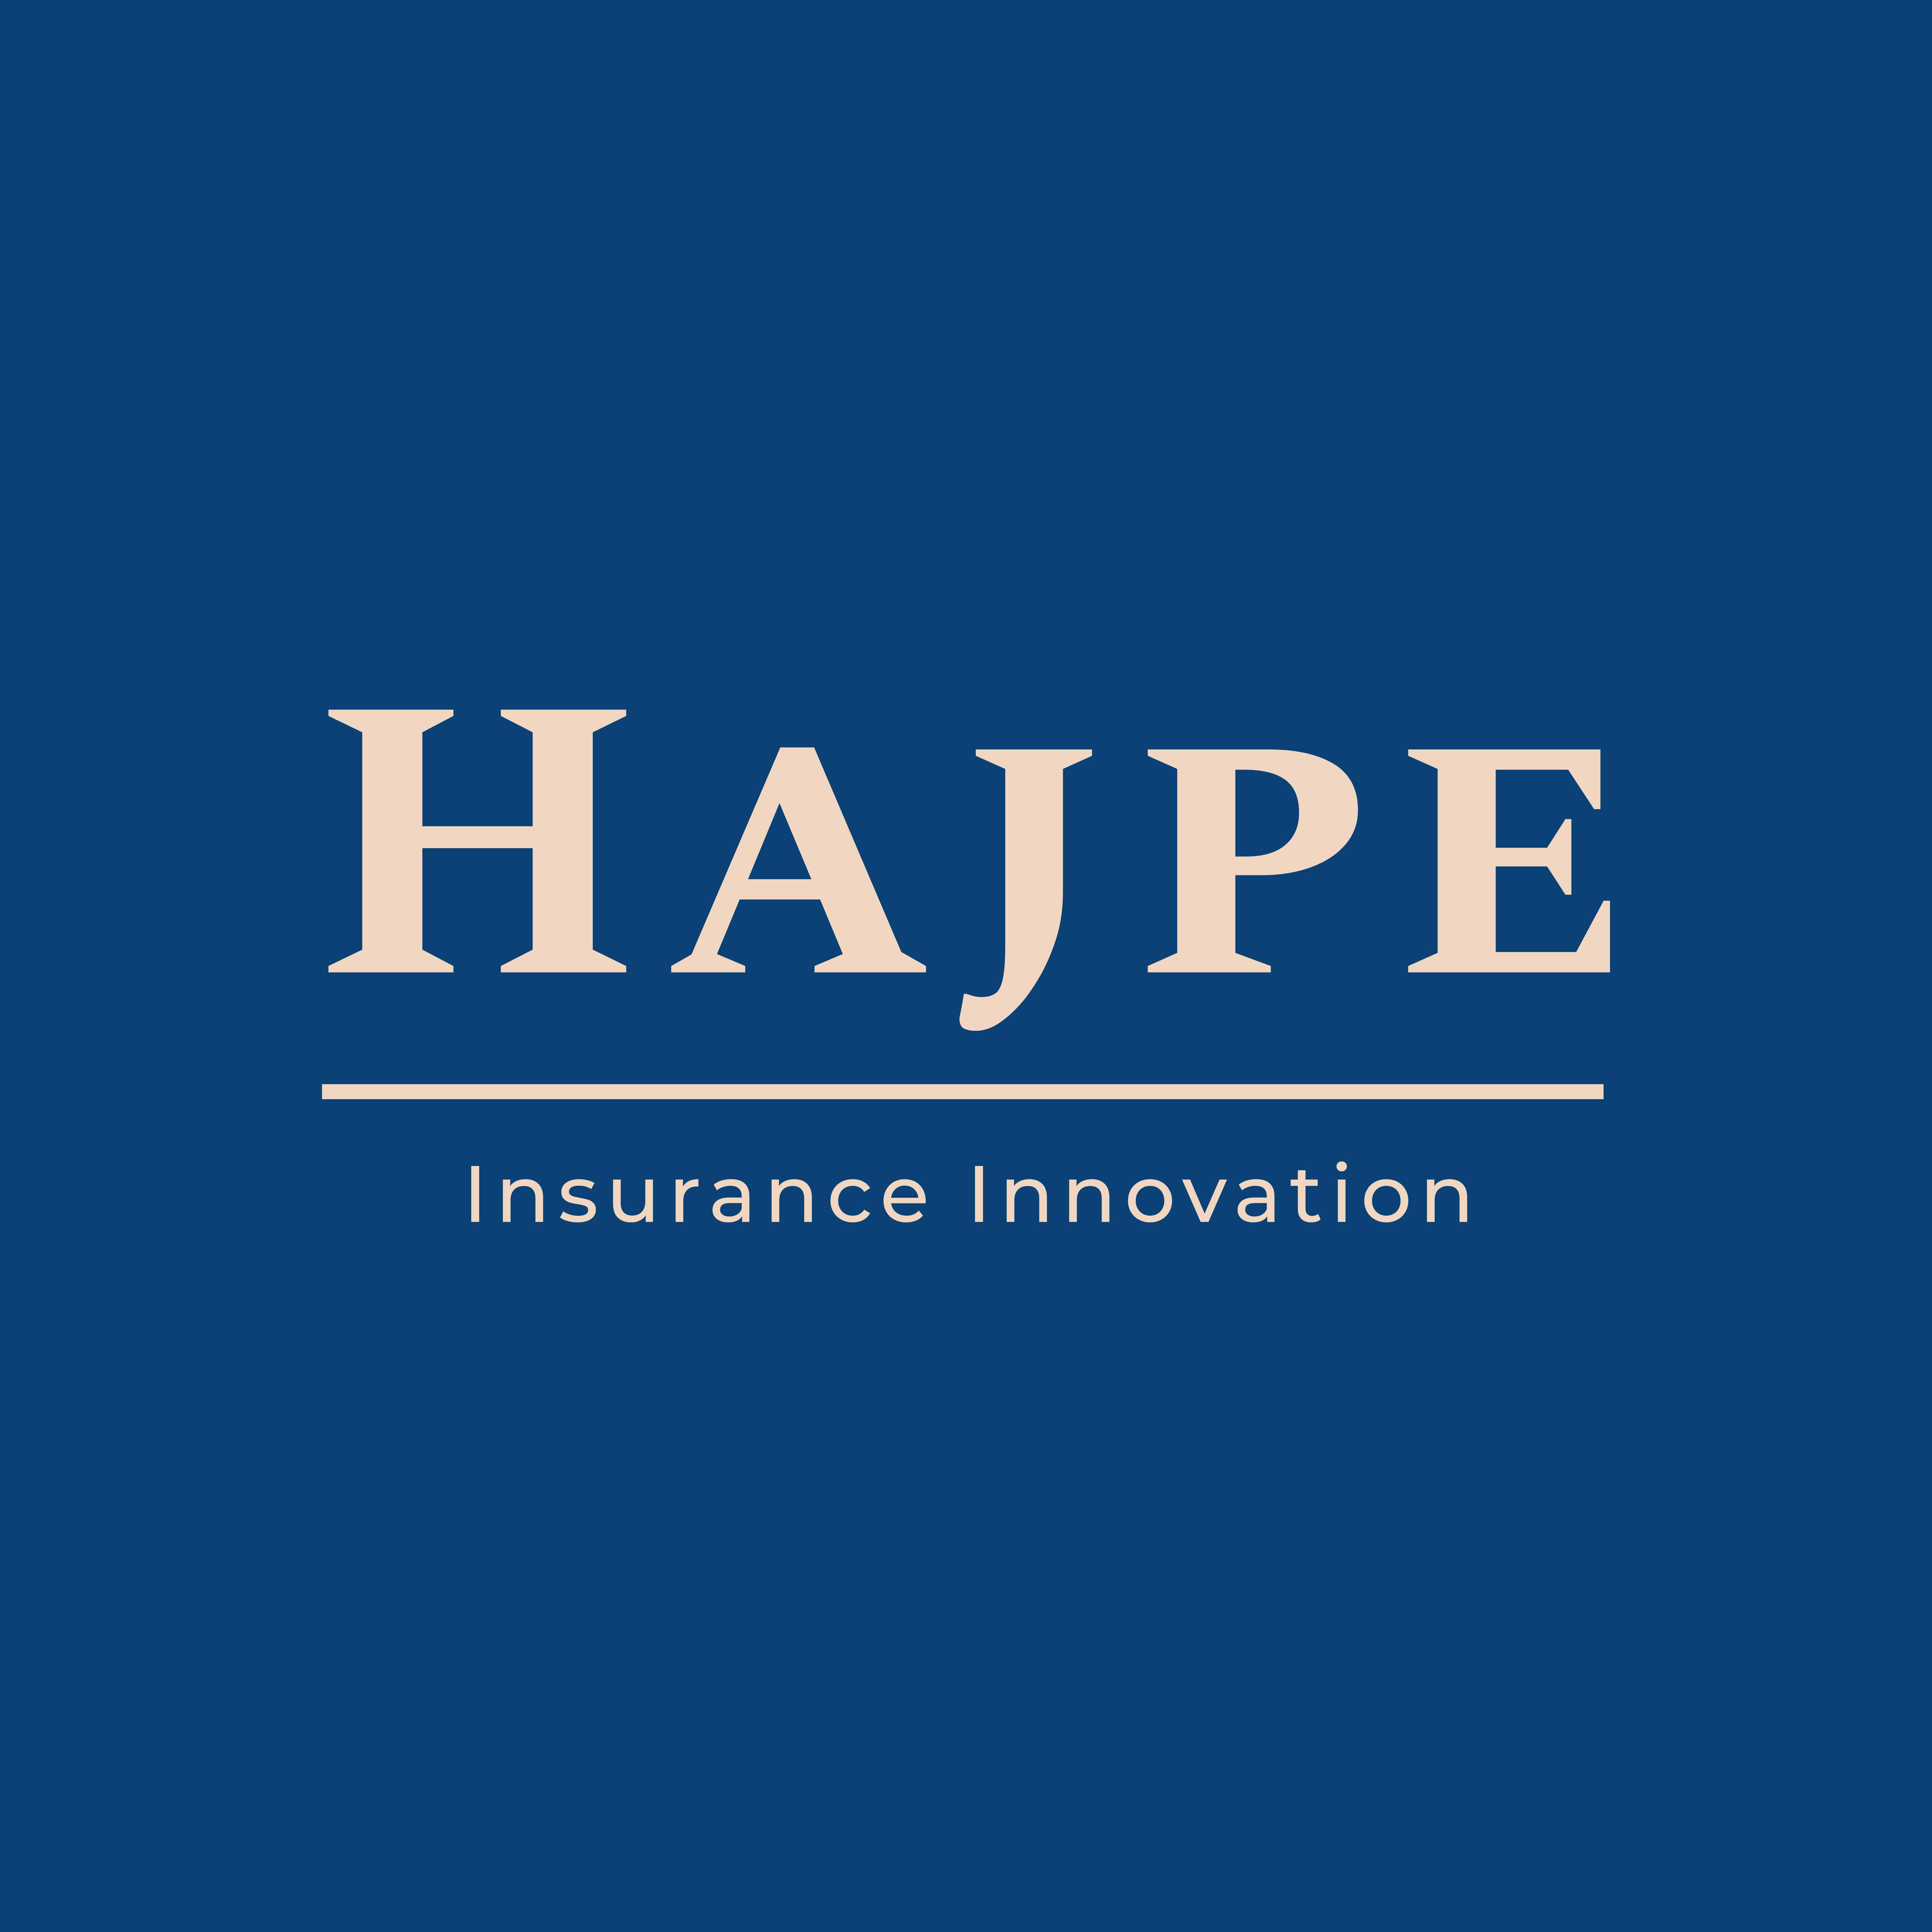 Hajpe - Insurance Innovation